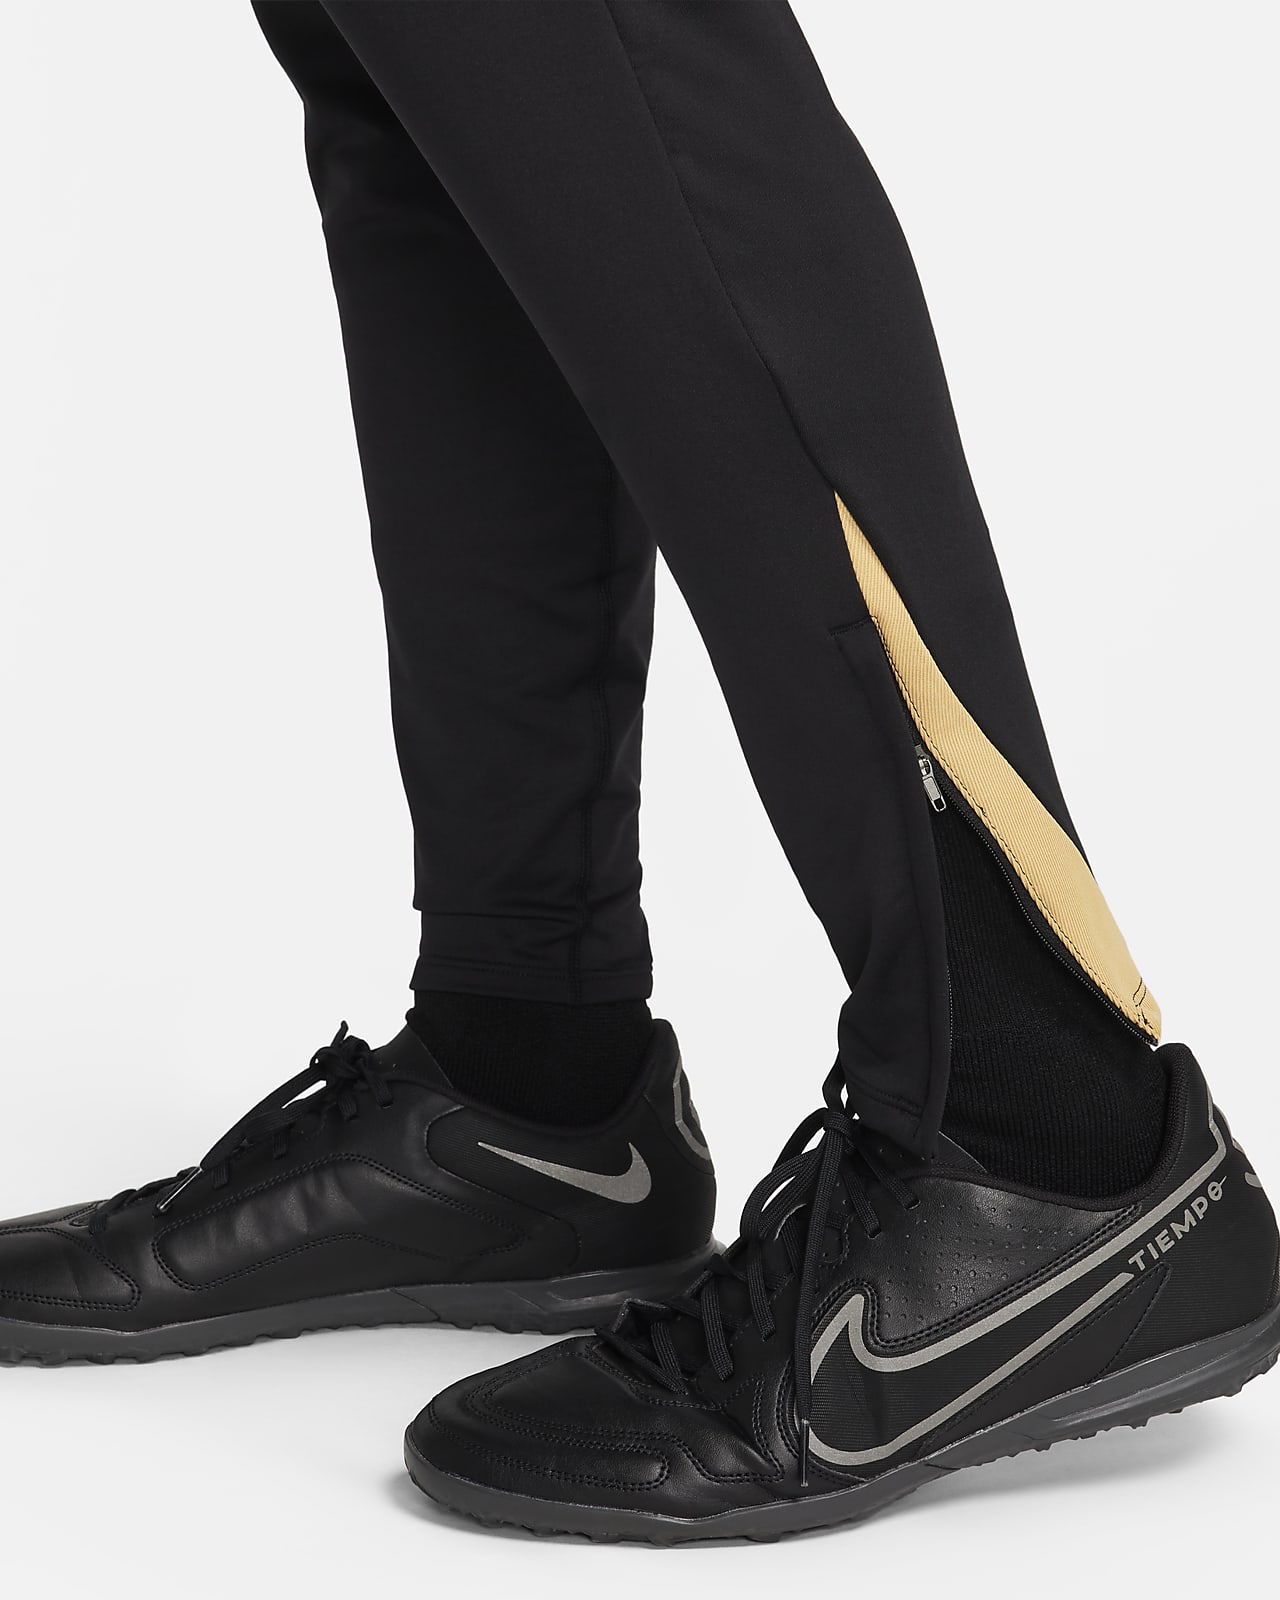 Jual Nike Men Football Pro Tight Celana Olahraga Pria [bv5642-010